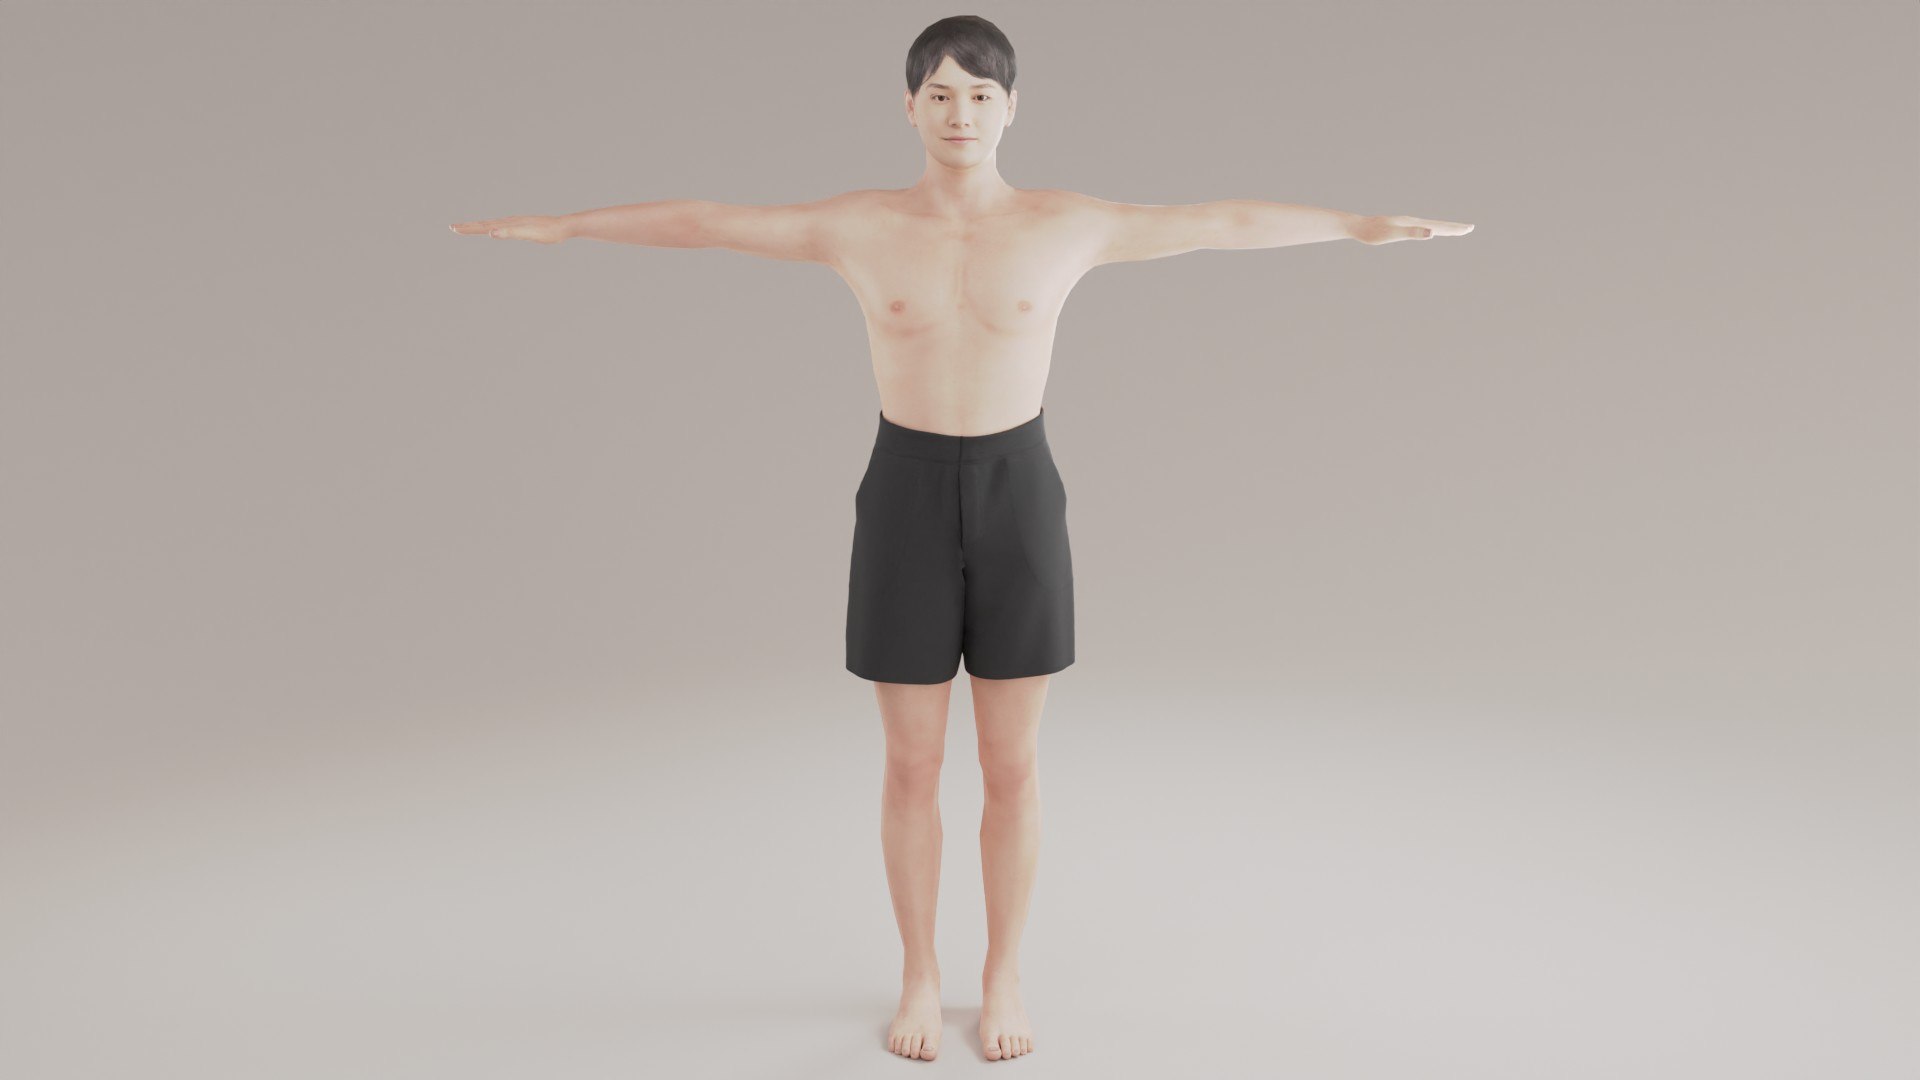 Tpose 3D Models download - Free3D